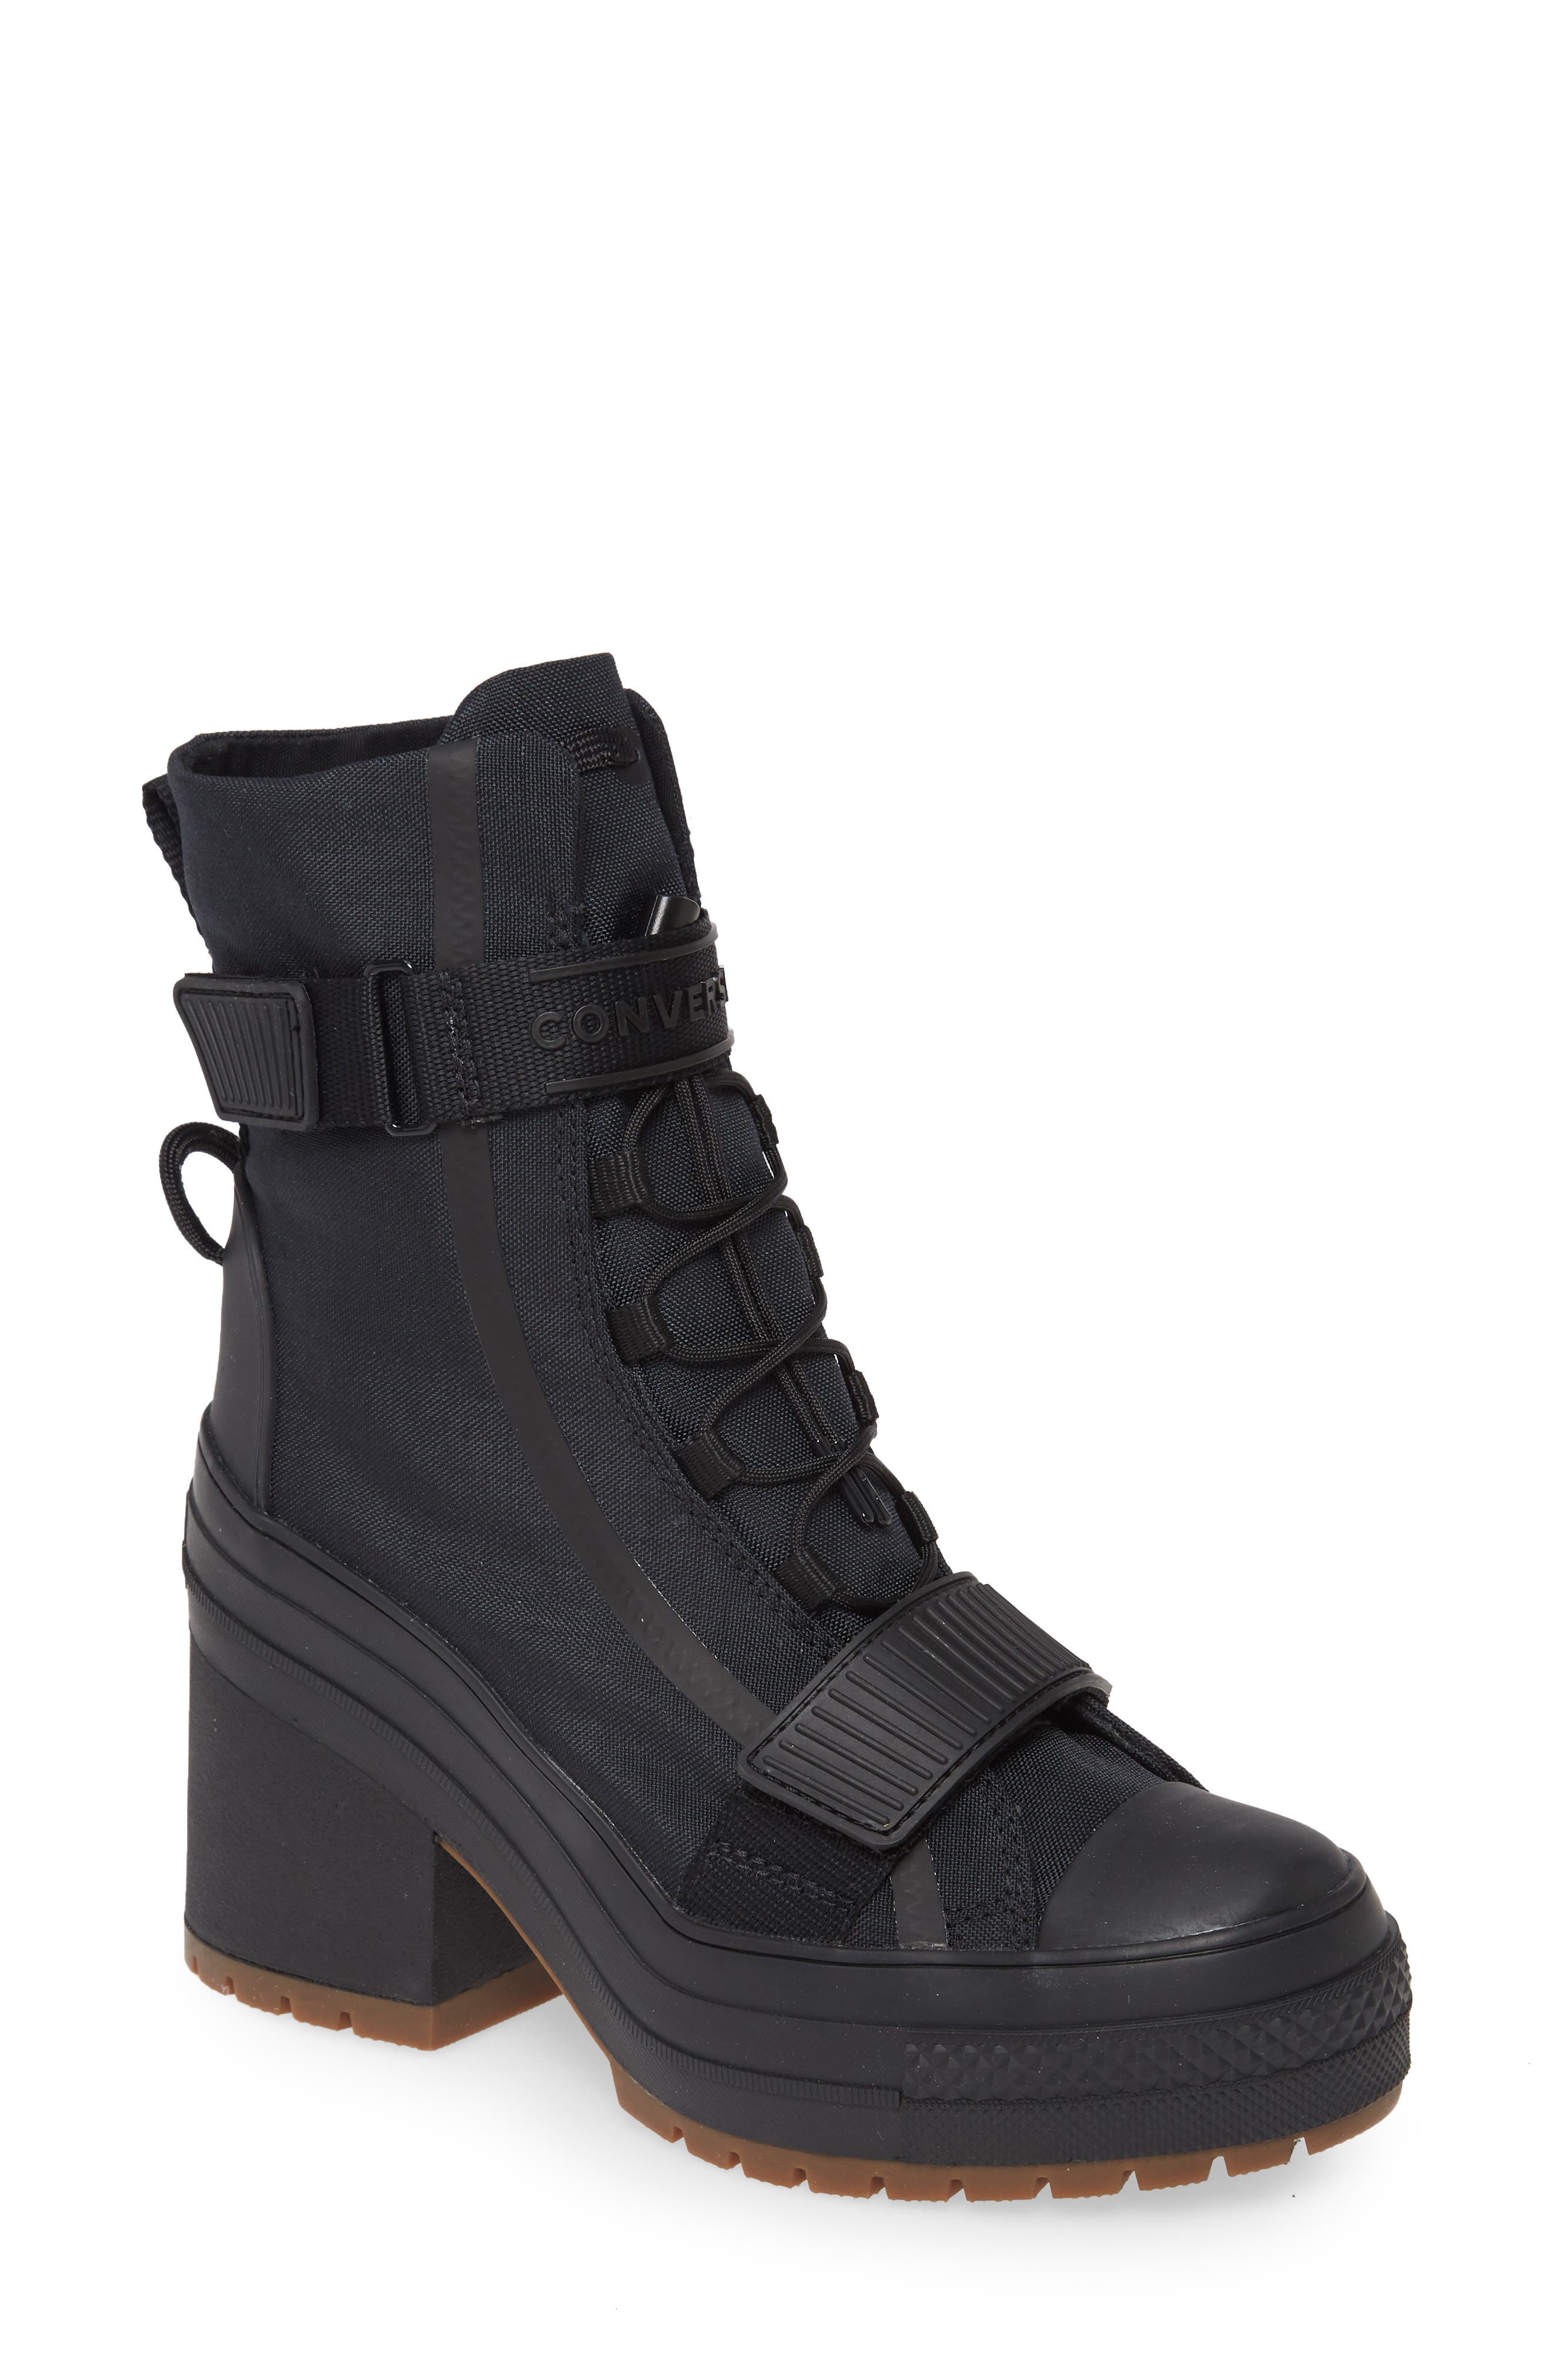 converse boots black